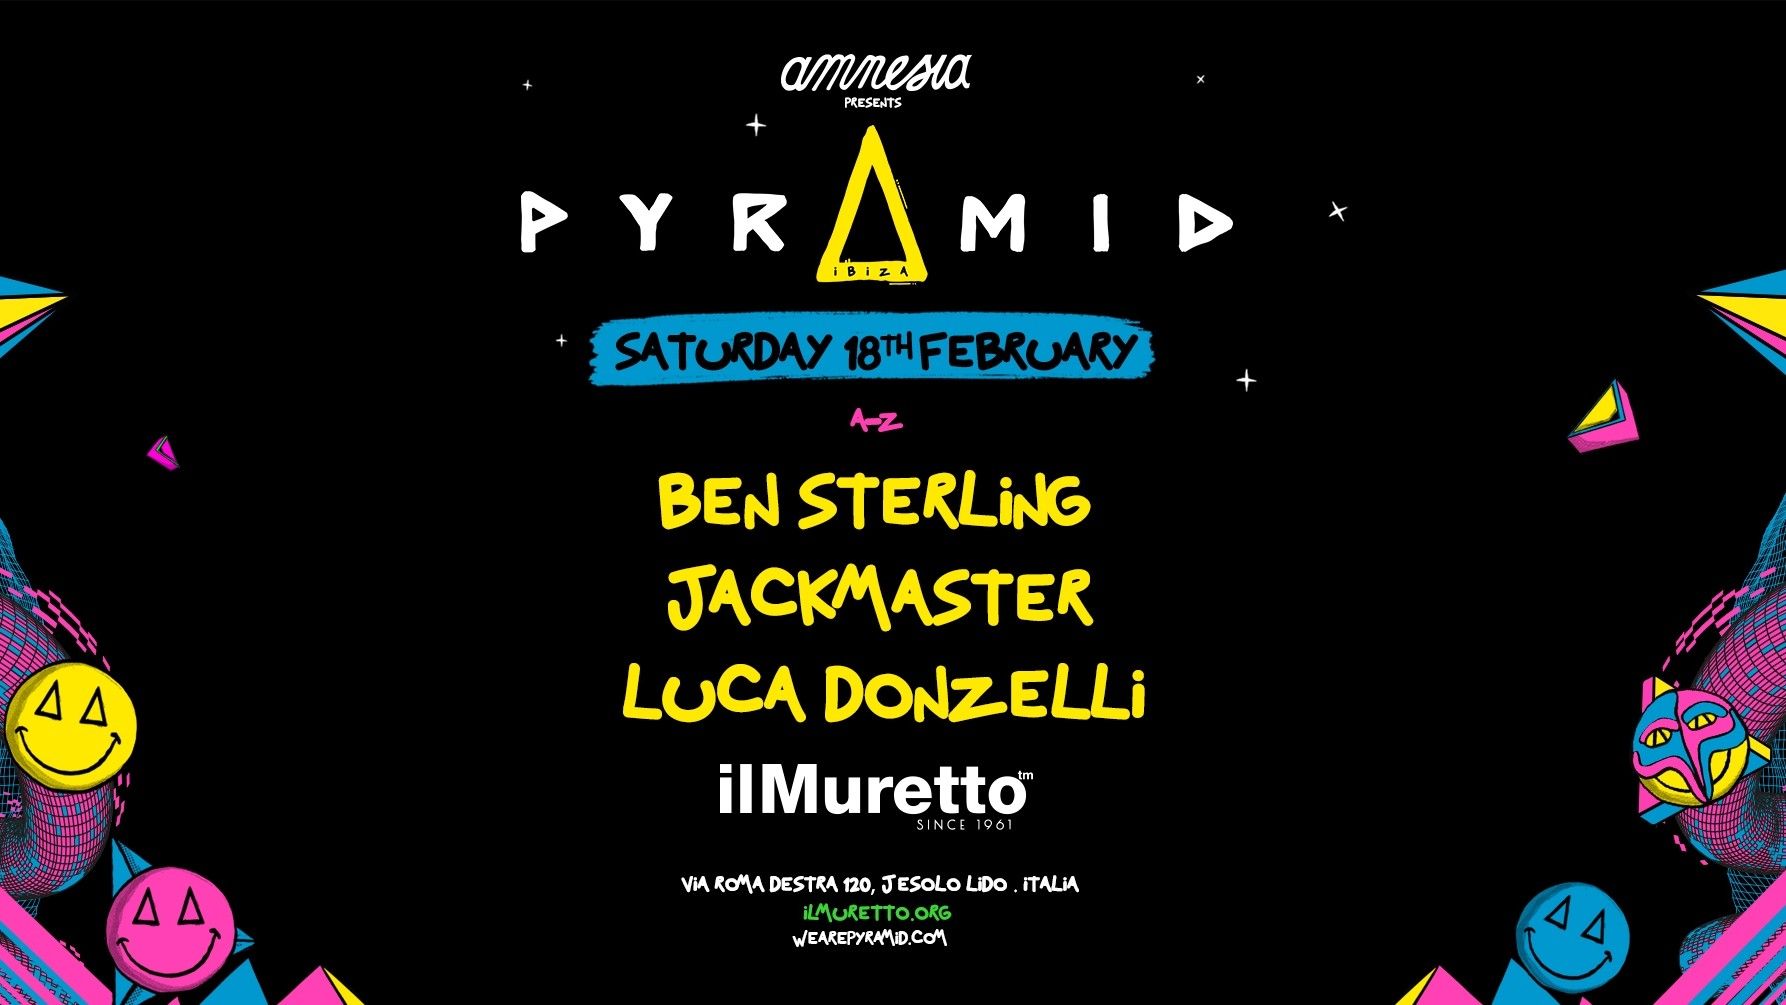 Pyramid by Amnesia Ibiza w/Ben Sterling + Jackmaster + Luca Donzelli